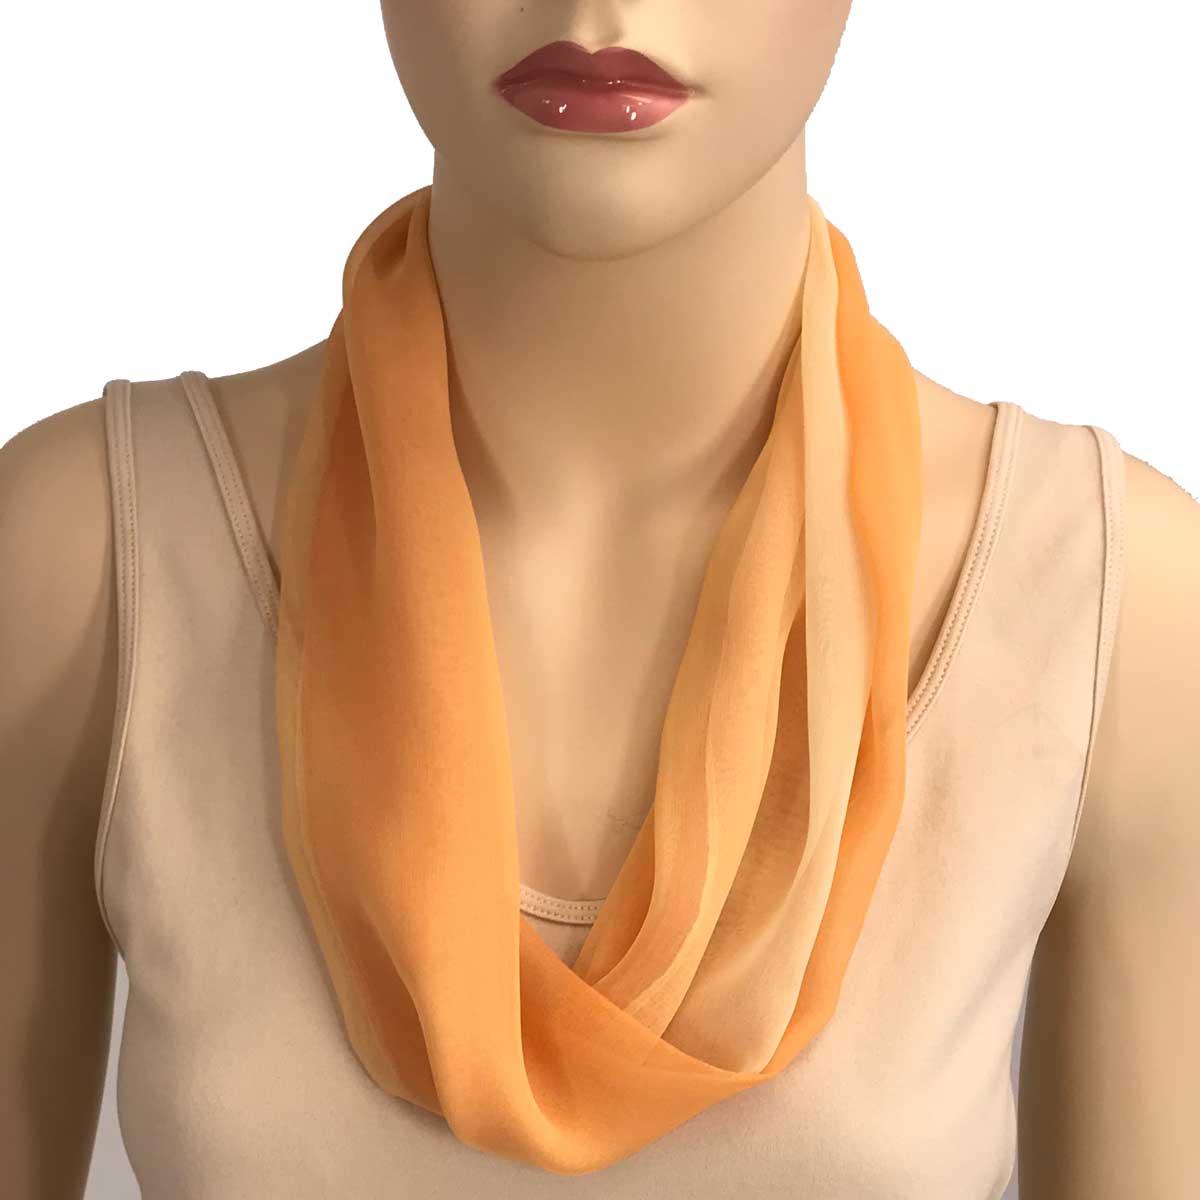 106OR - Beige-Peach-Orange Tri-Color<br>
Magnetic Clasp Silky Dress Scarf